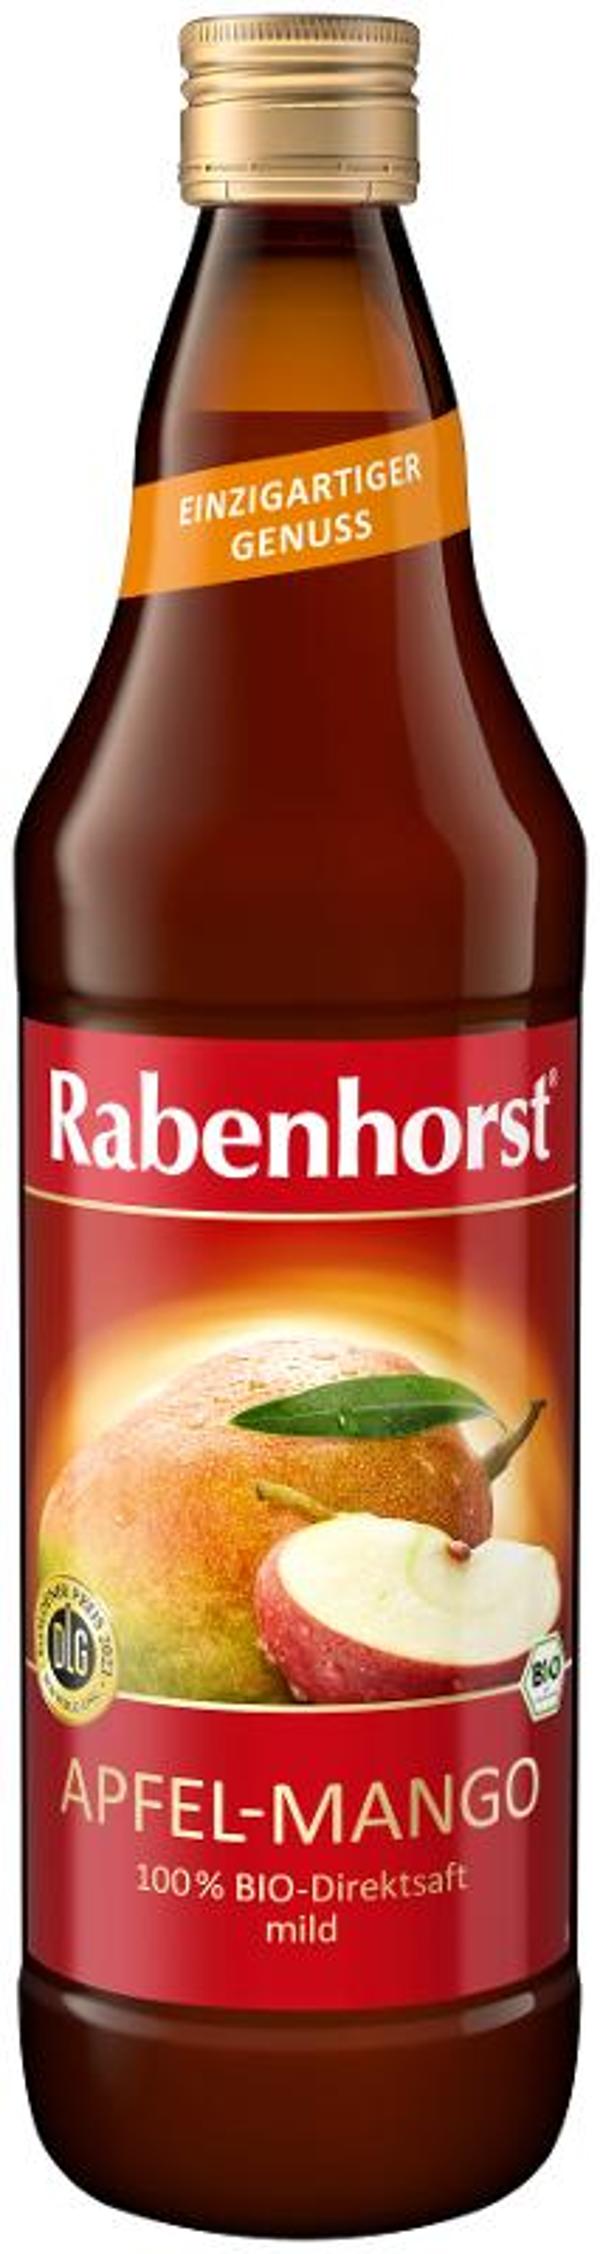 Produktfoto zu Rabenhorst Apfel-Mango Bio [0,75l]